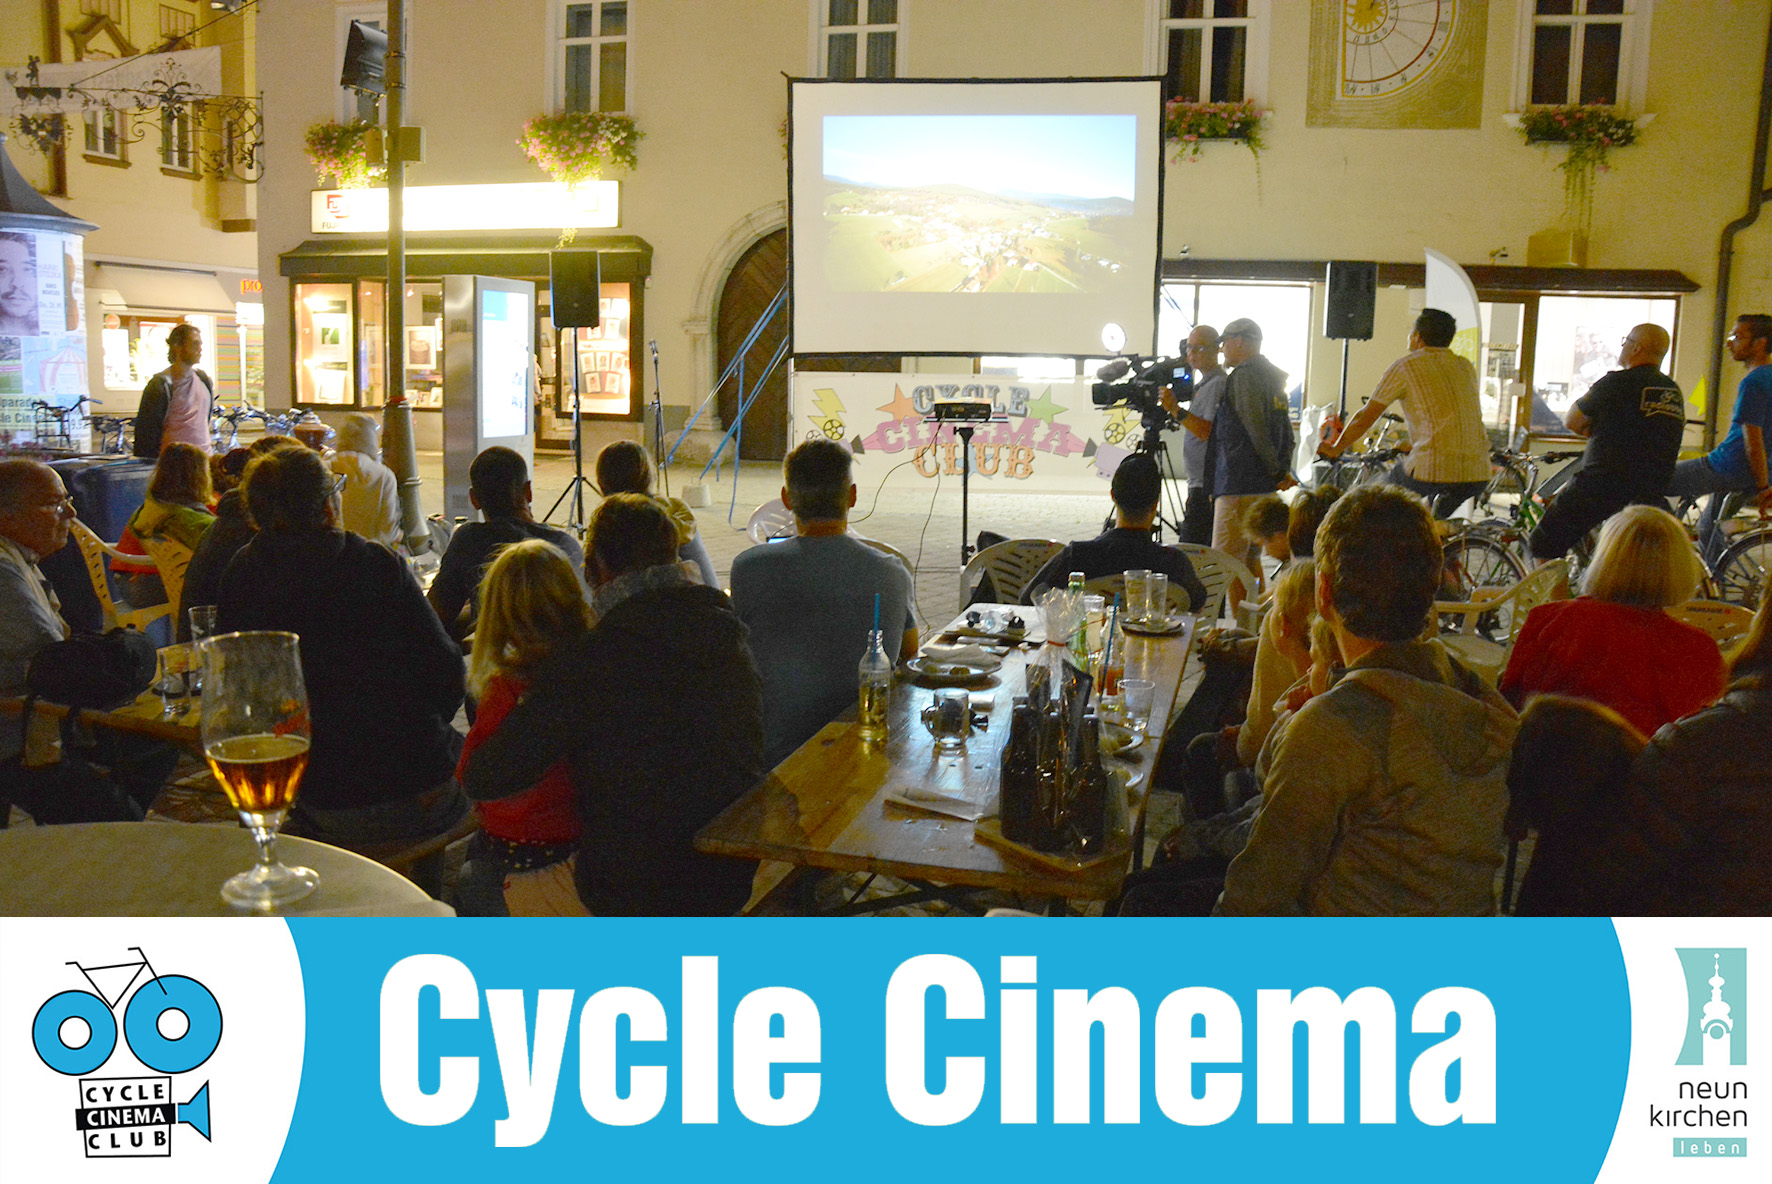 Cycle Cinema